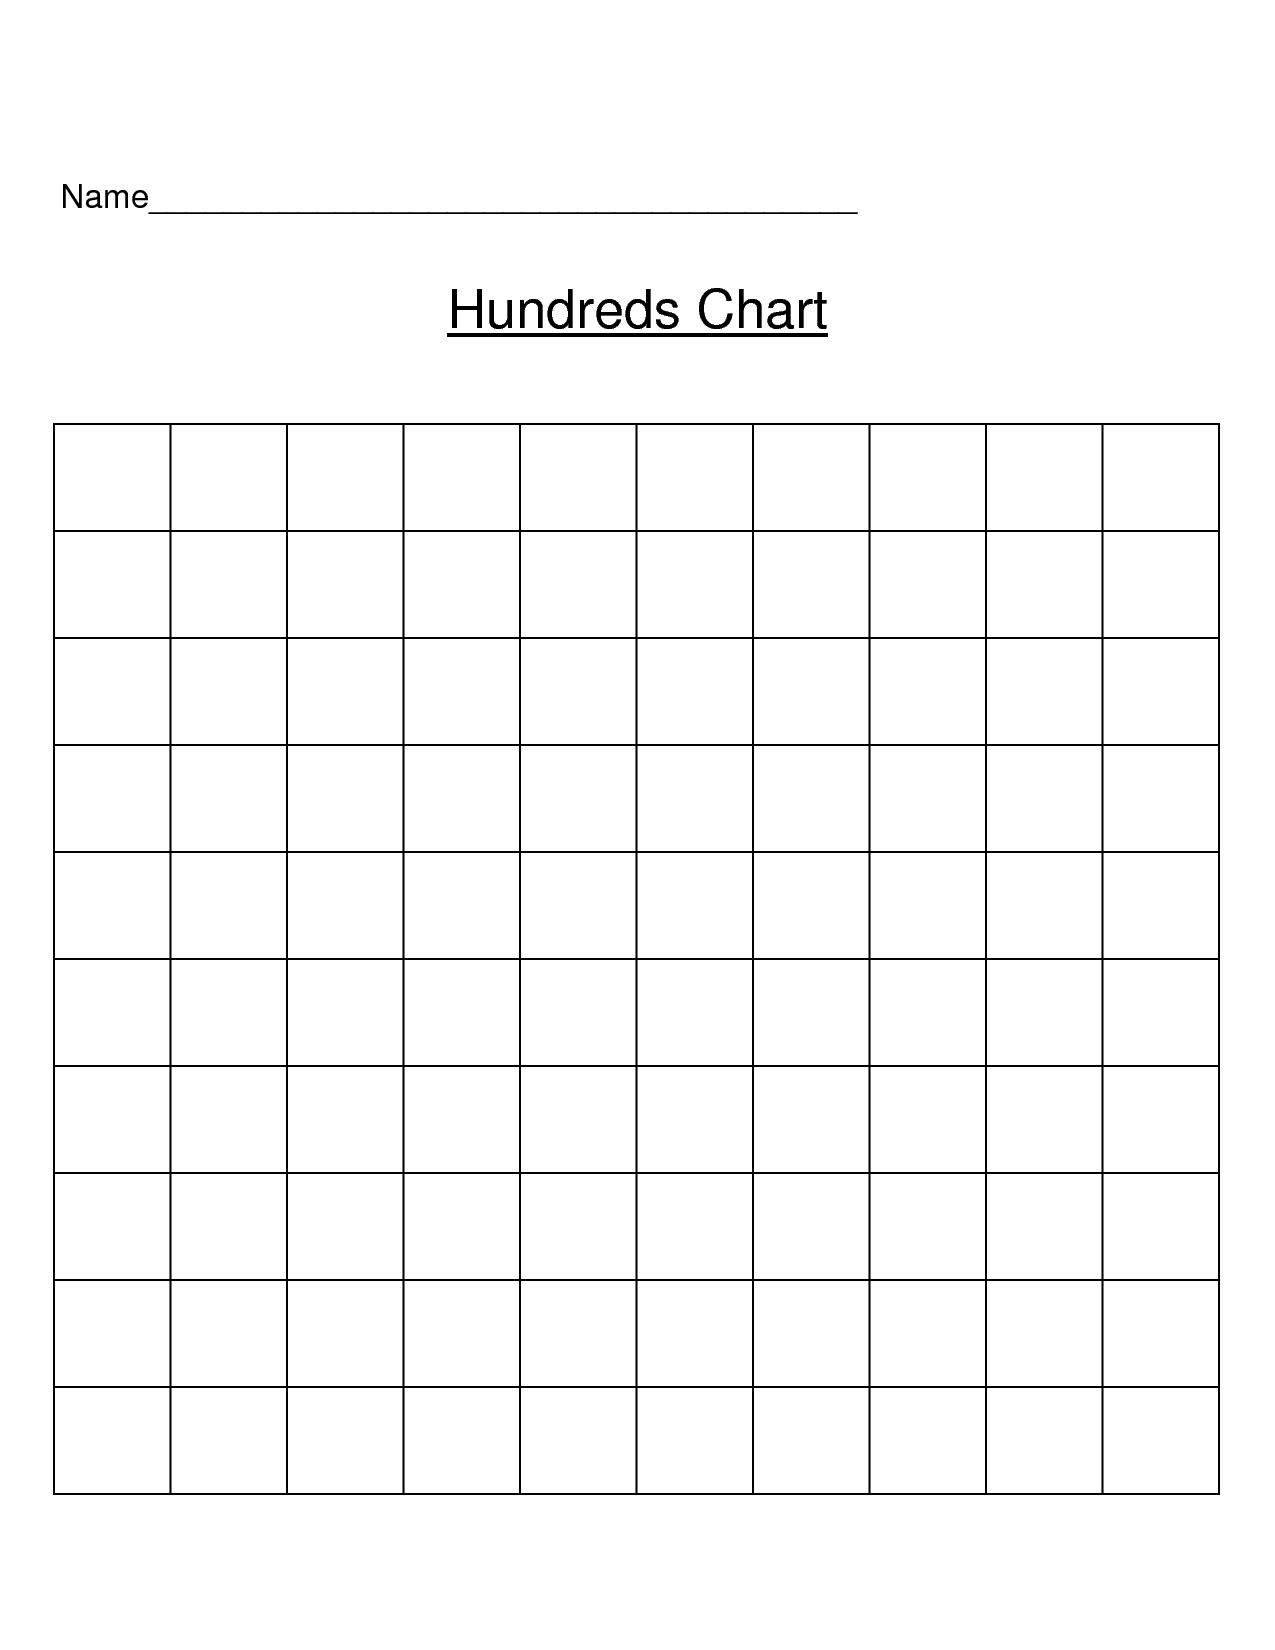 Blank 100 Chart | Blank Hundreds Chart | Printable Chart